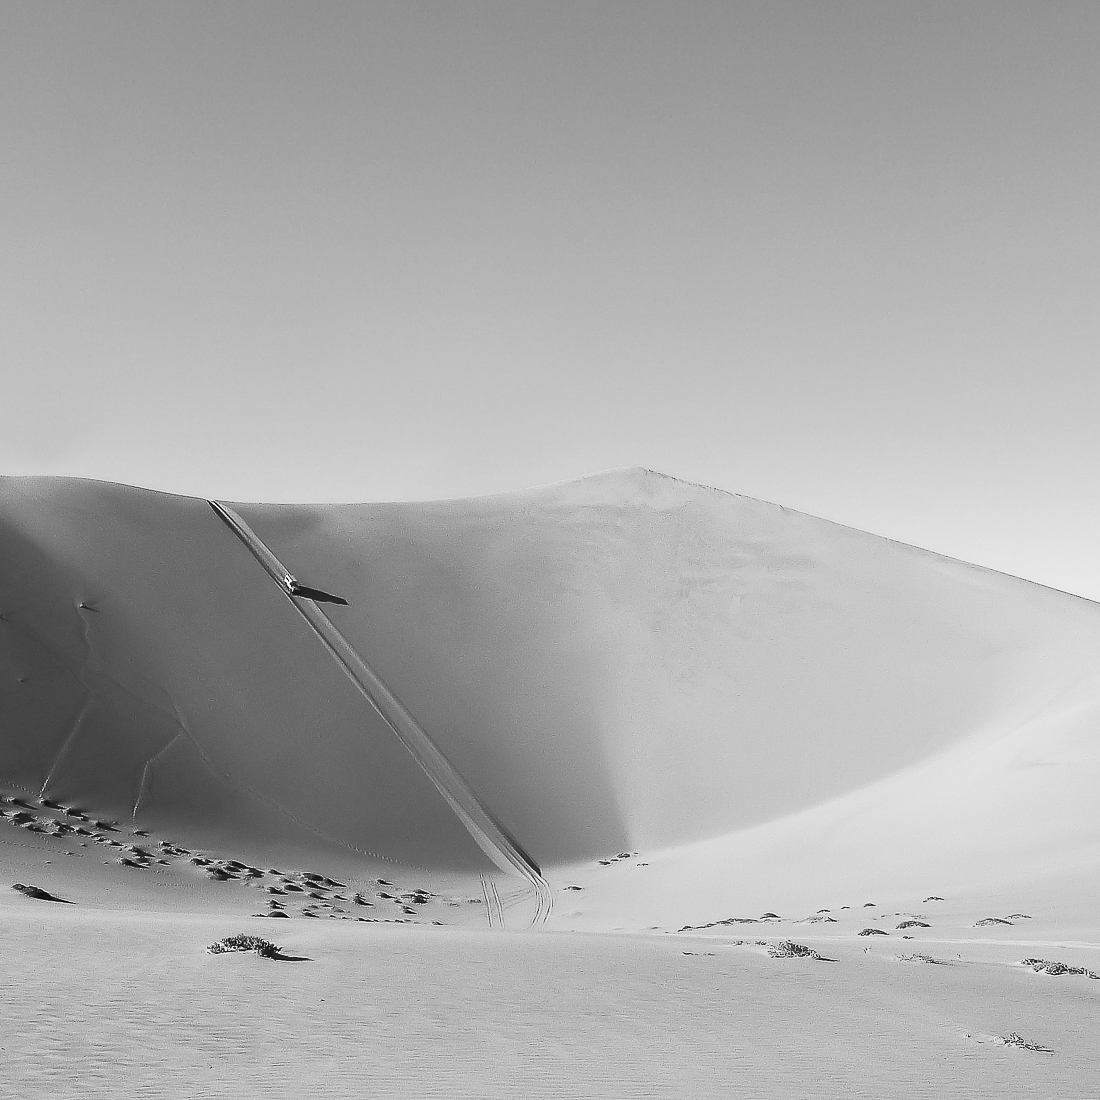 Crossing tne Namib desert